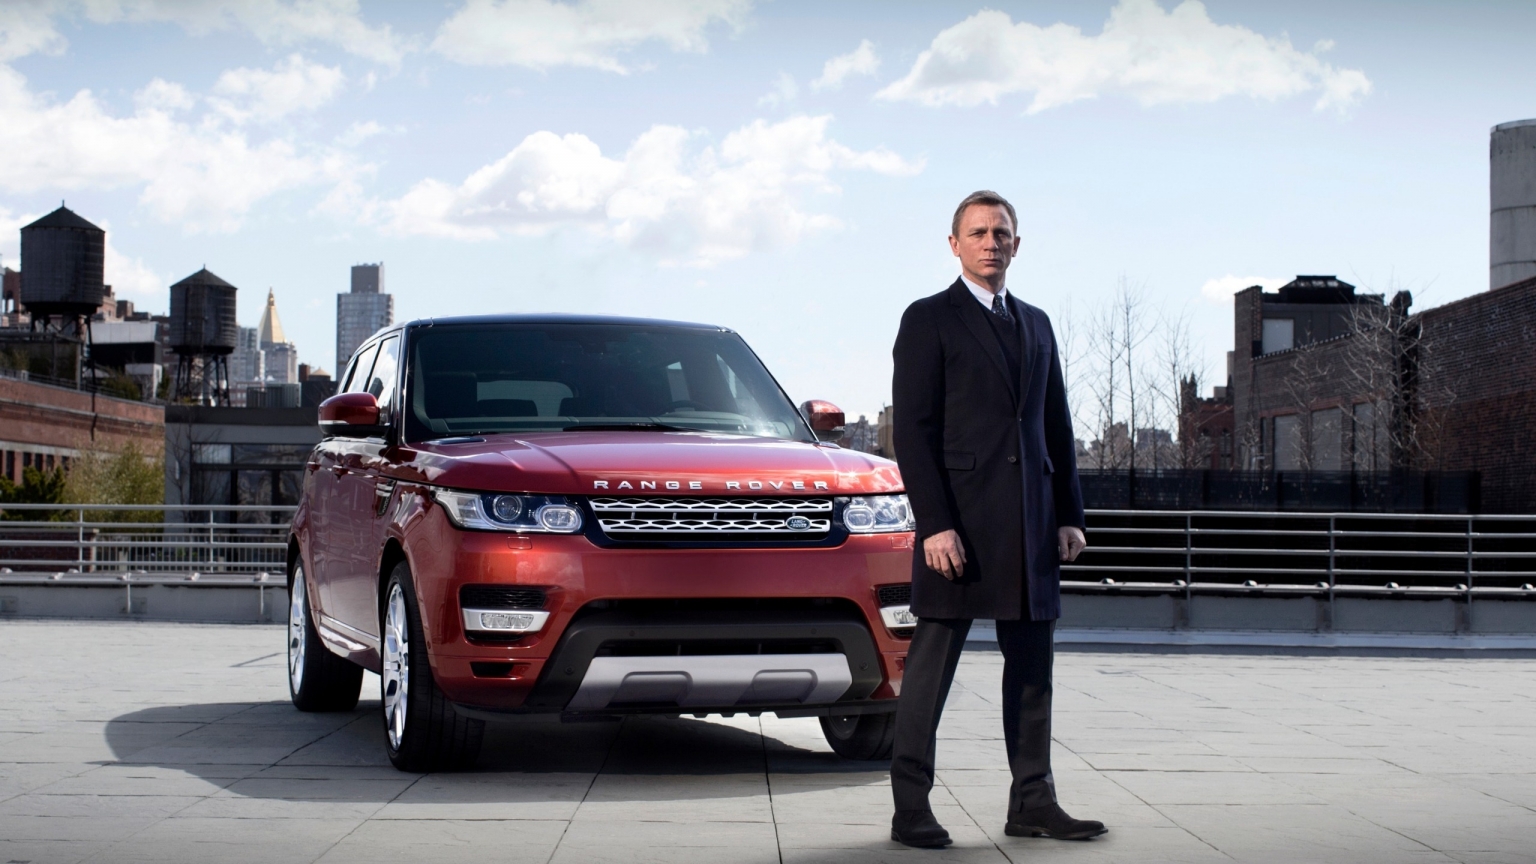 Daniel Craig and Range Rover for 1536 x 864 HDTV resolution